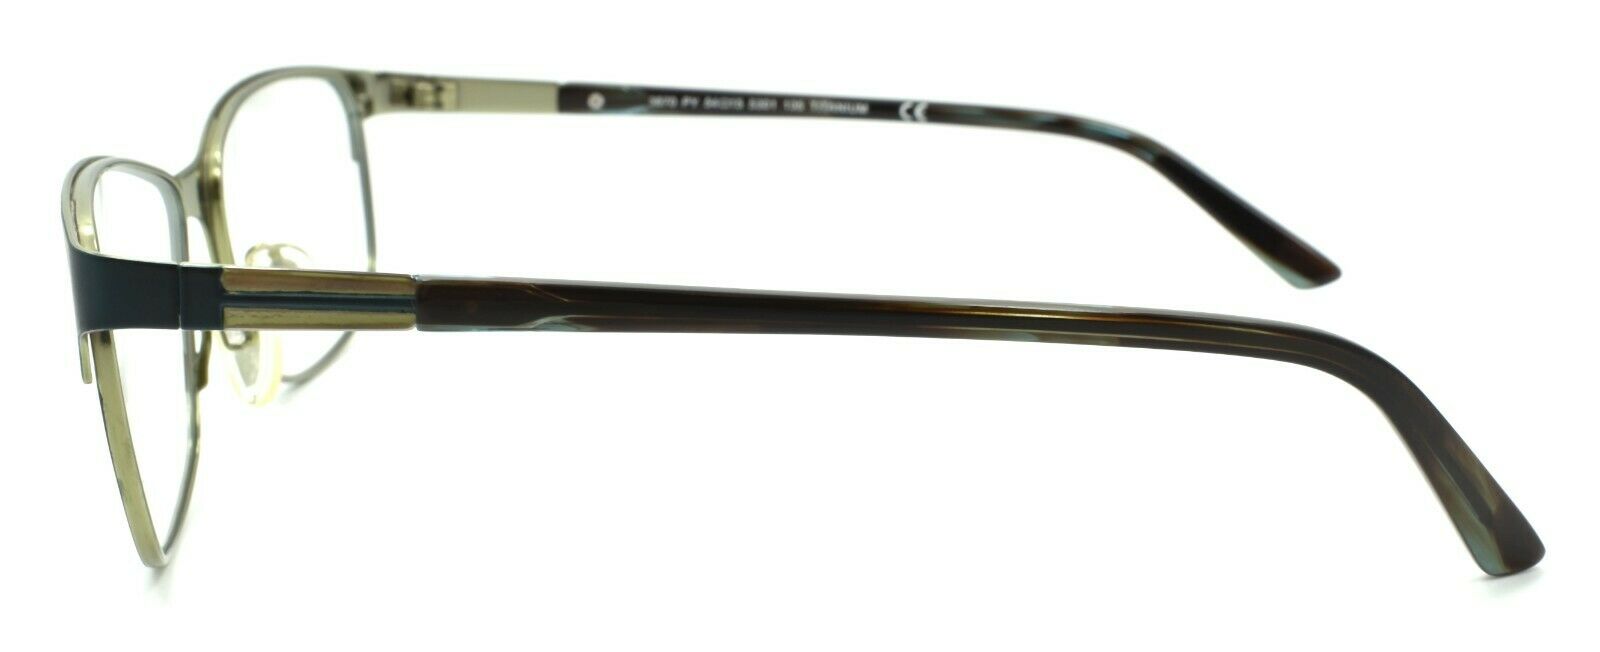 3-Skaga 3870 Py 5301 Women's Eyeglasses Frames TITANIUM 54-15-135 Green-IKSpecs